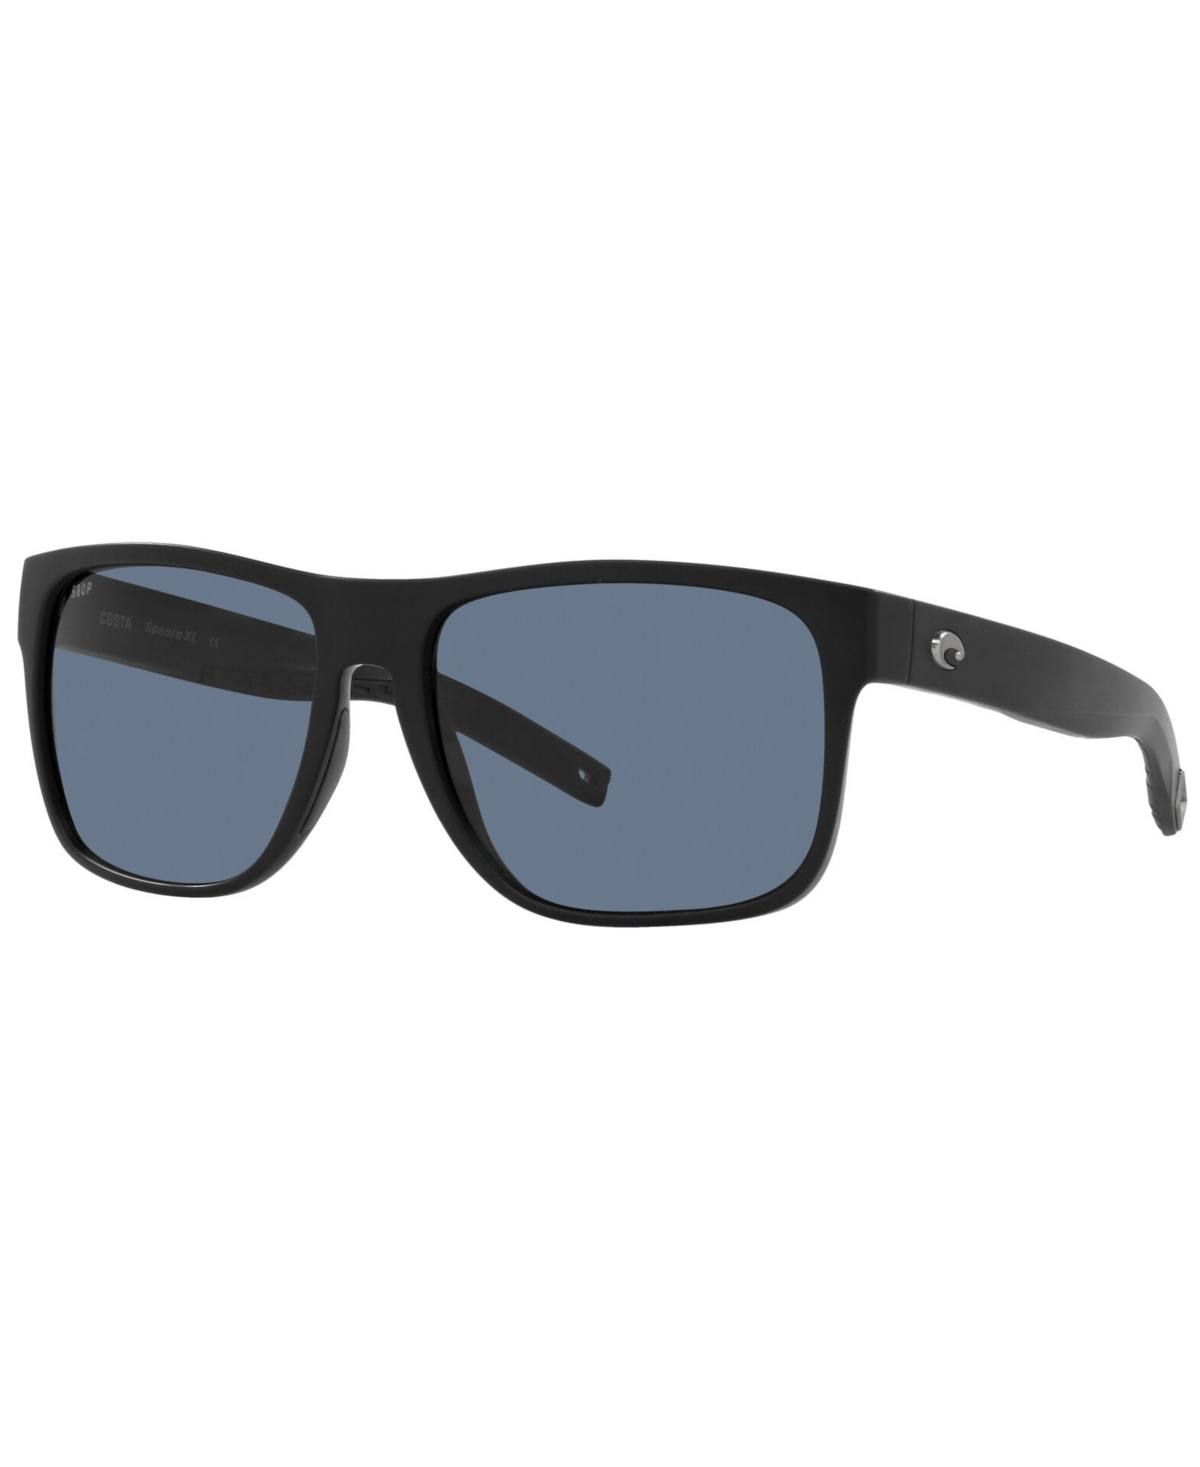 Men's Spearo Xl Polarized Sunglasses, 6S9013 - Midnight Blue